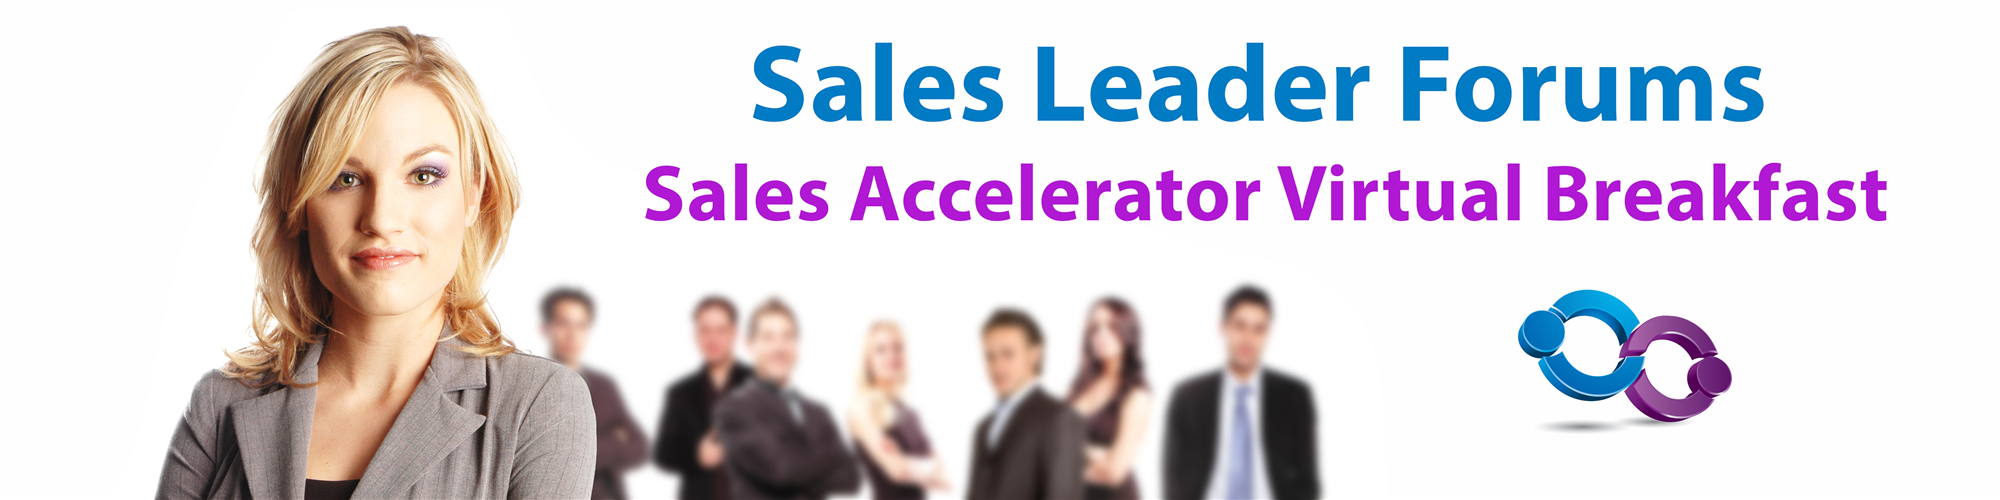 Sales Leader Accelerator Virtual Breakfast summary image v12